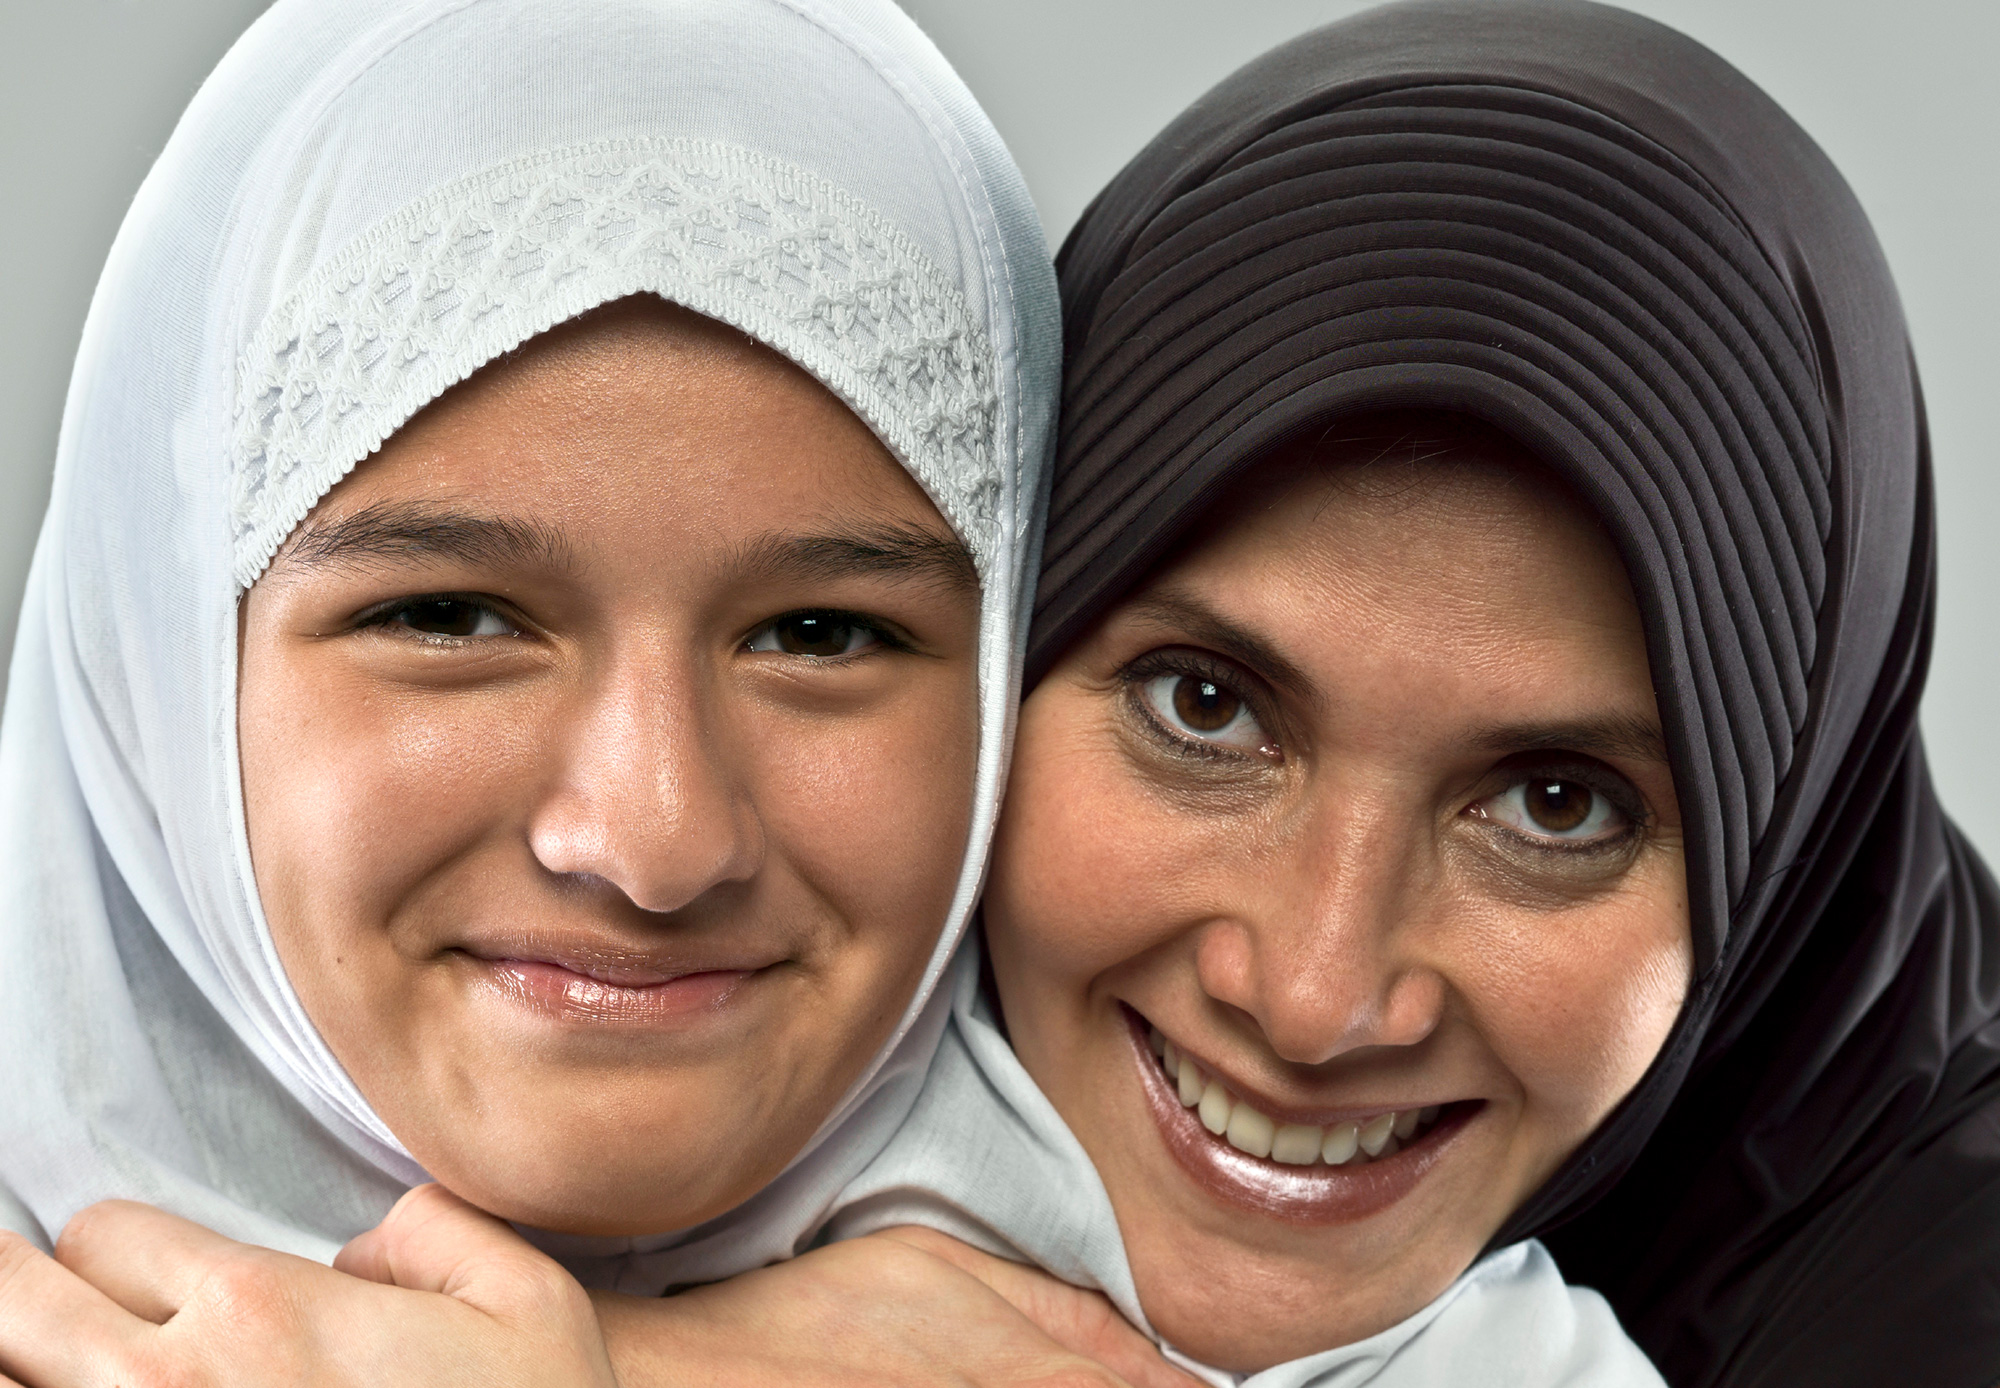 Portrait of two women in head coverings smiling